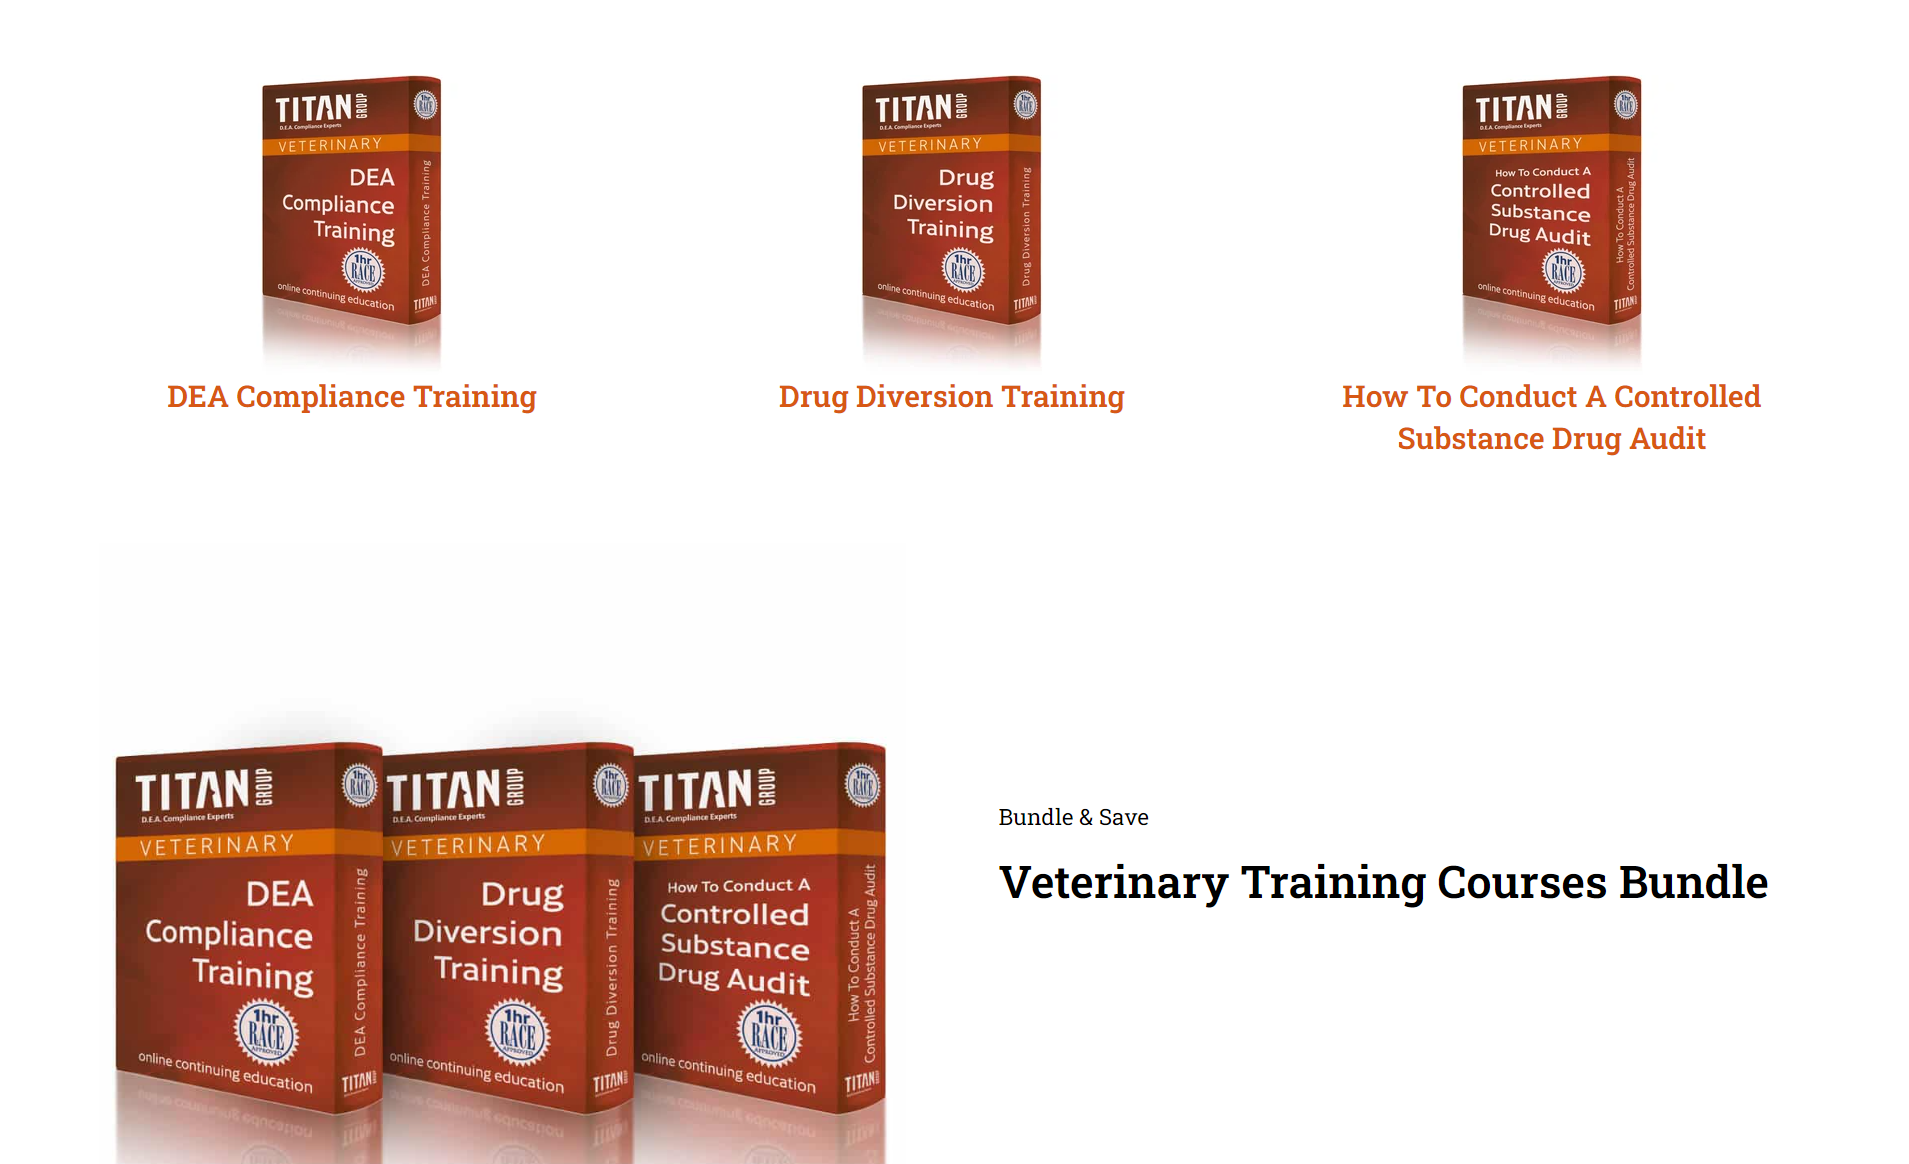 TITAN Veterinary Training Courses Bundle